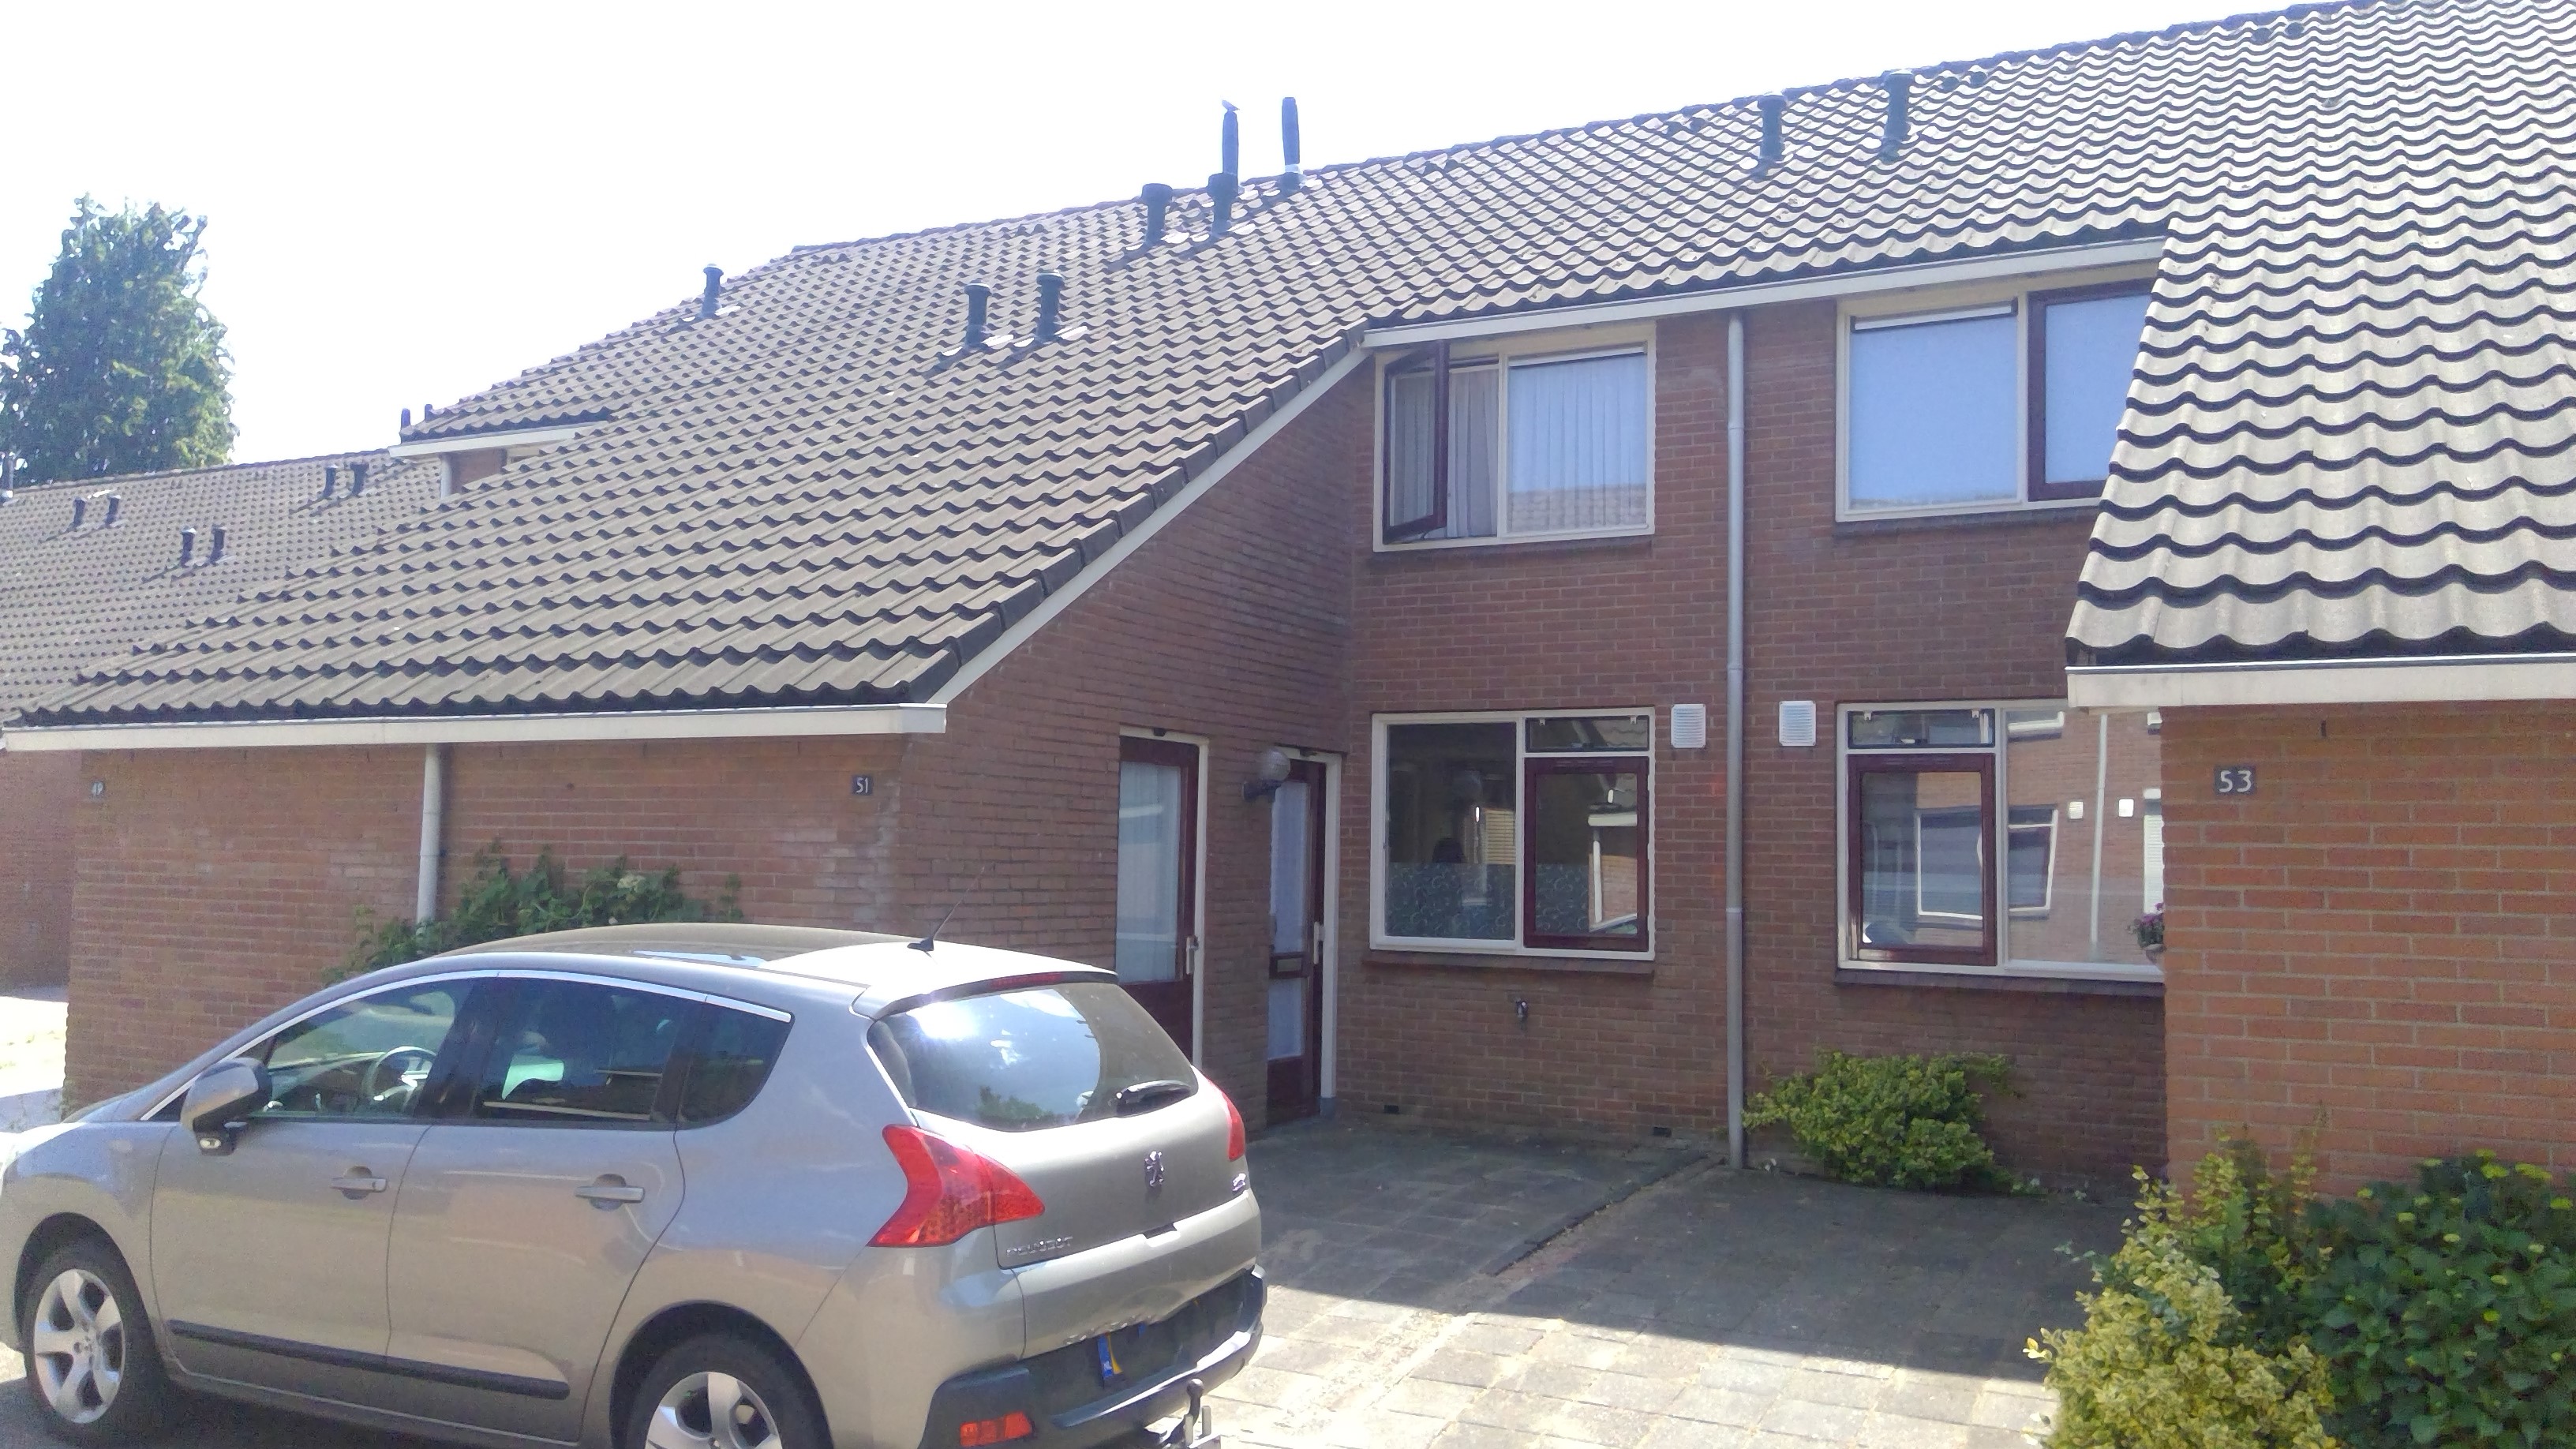 Lampertheimstraat 53, 7641 DS Wierden, Nederland